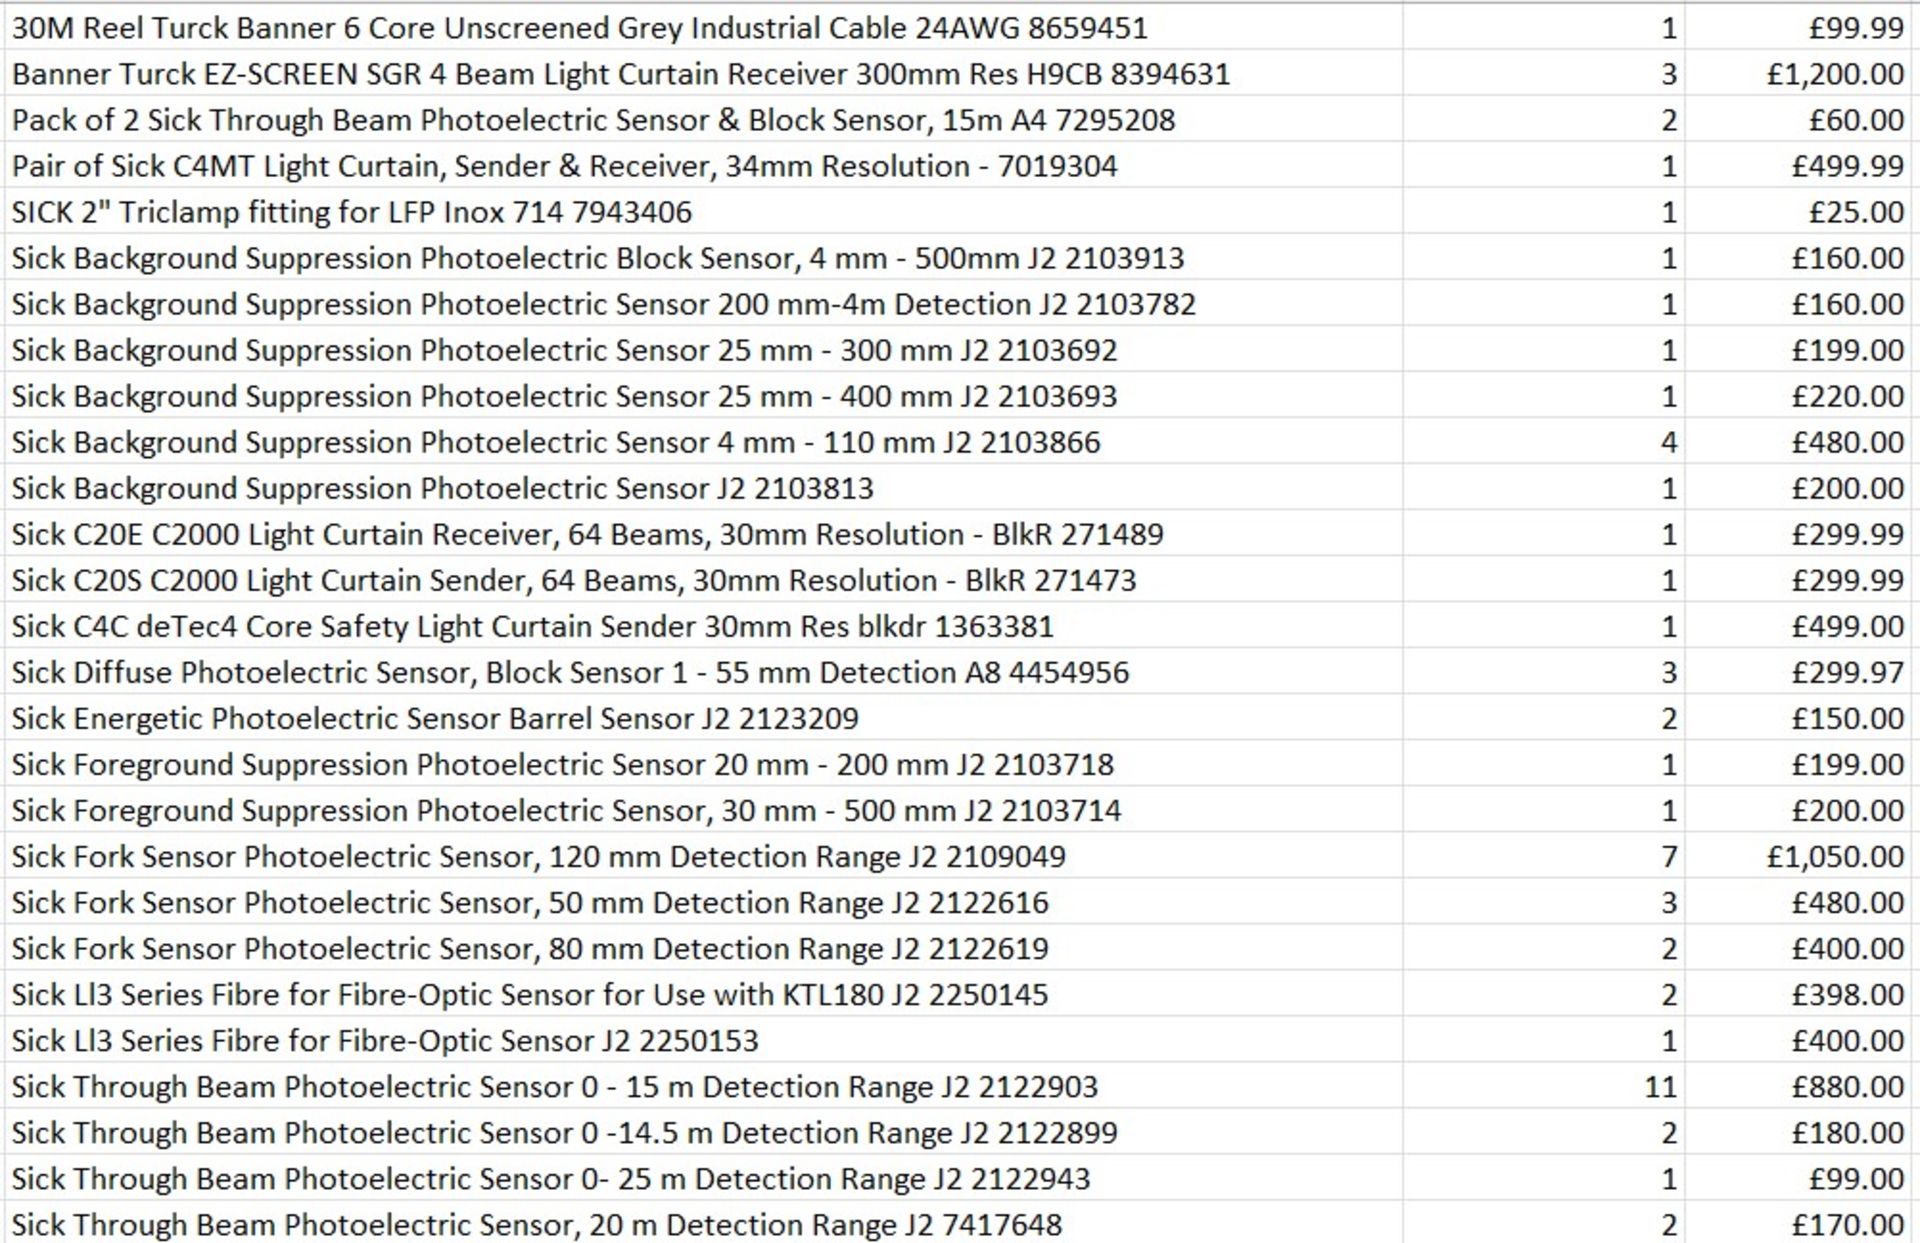 £10.8k worth of SICK items across 28 products - light curtain / sensors etc